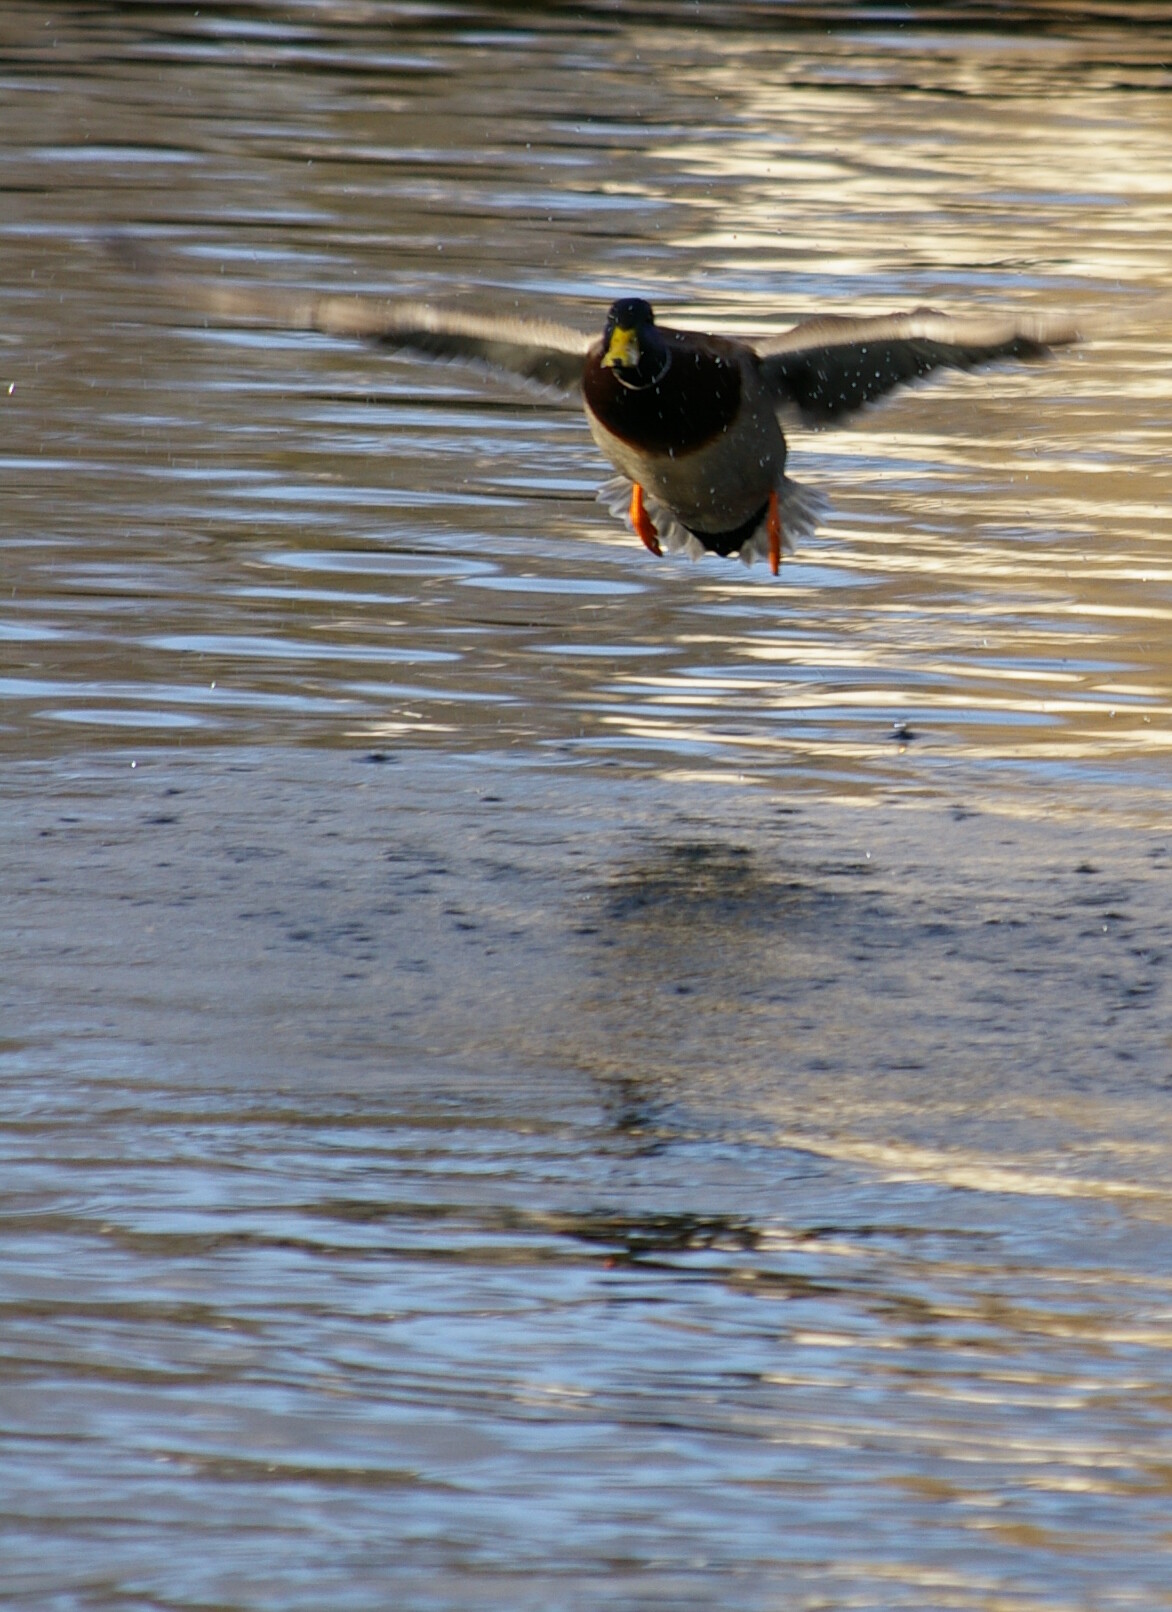 The flight of duck.